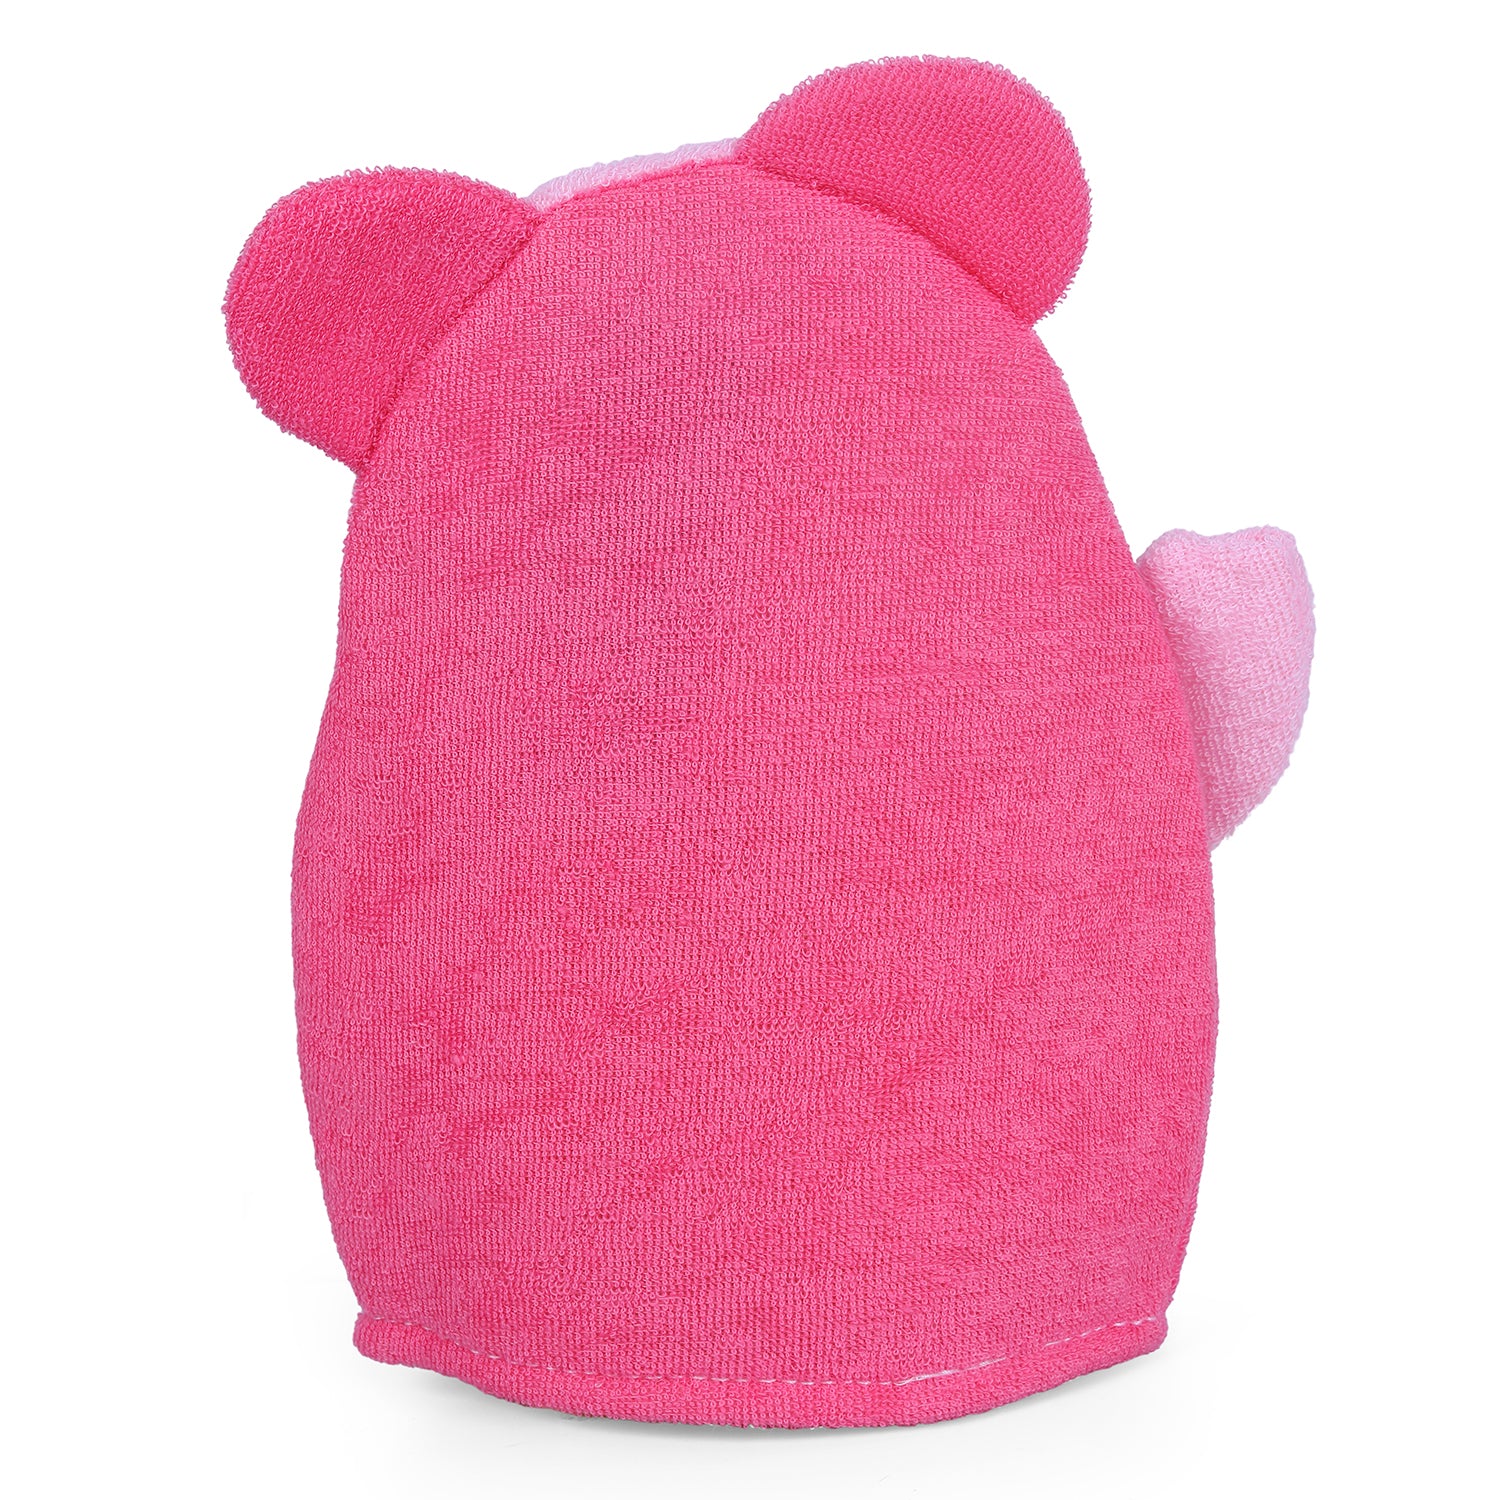 Baby Moo Blushing Elephant Bath Time Fun Hand Puppet Loofah Bath Glove - Pink - Baby Moo